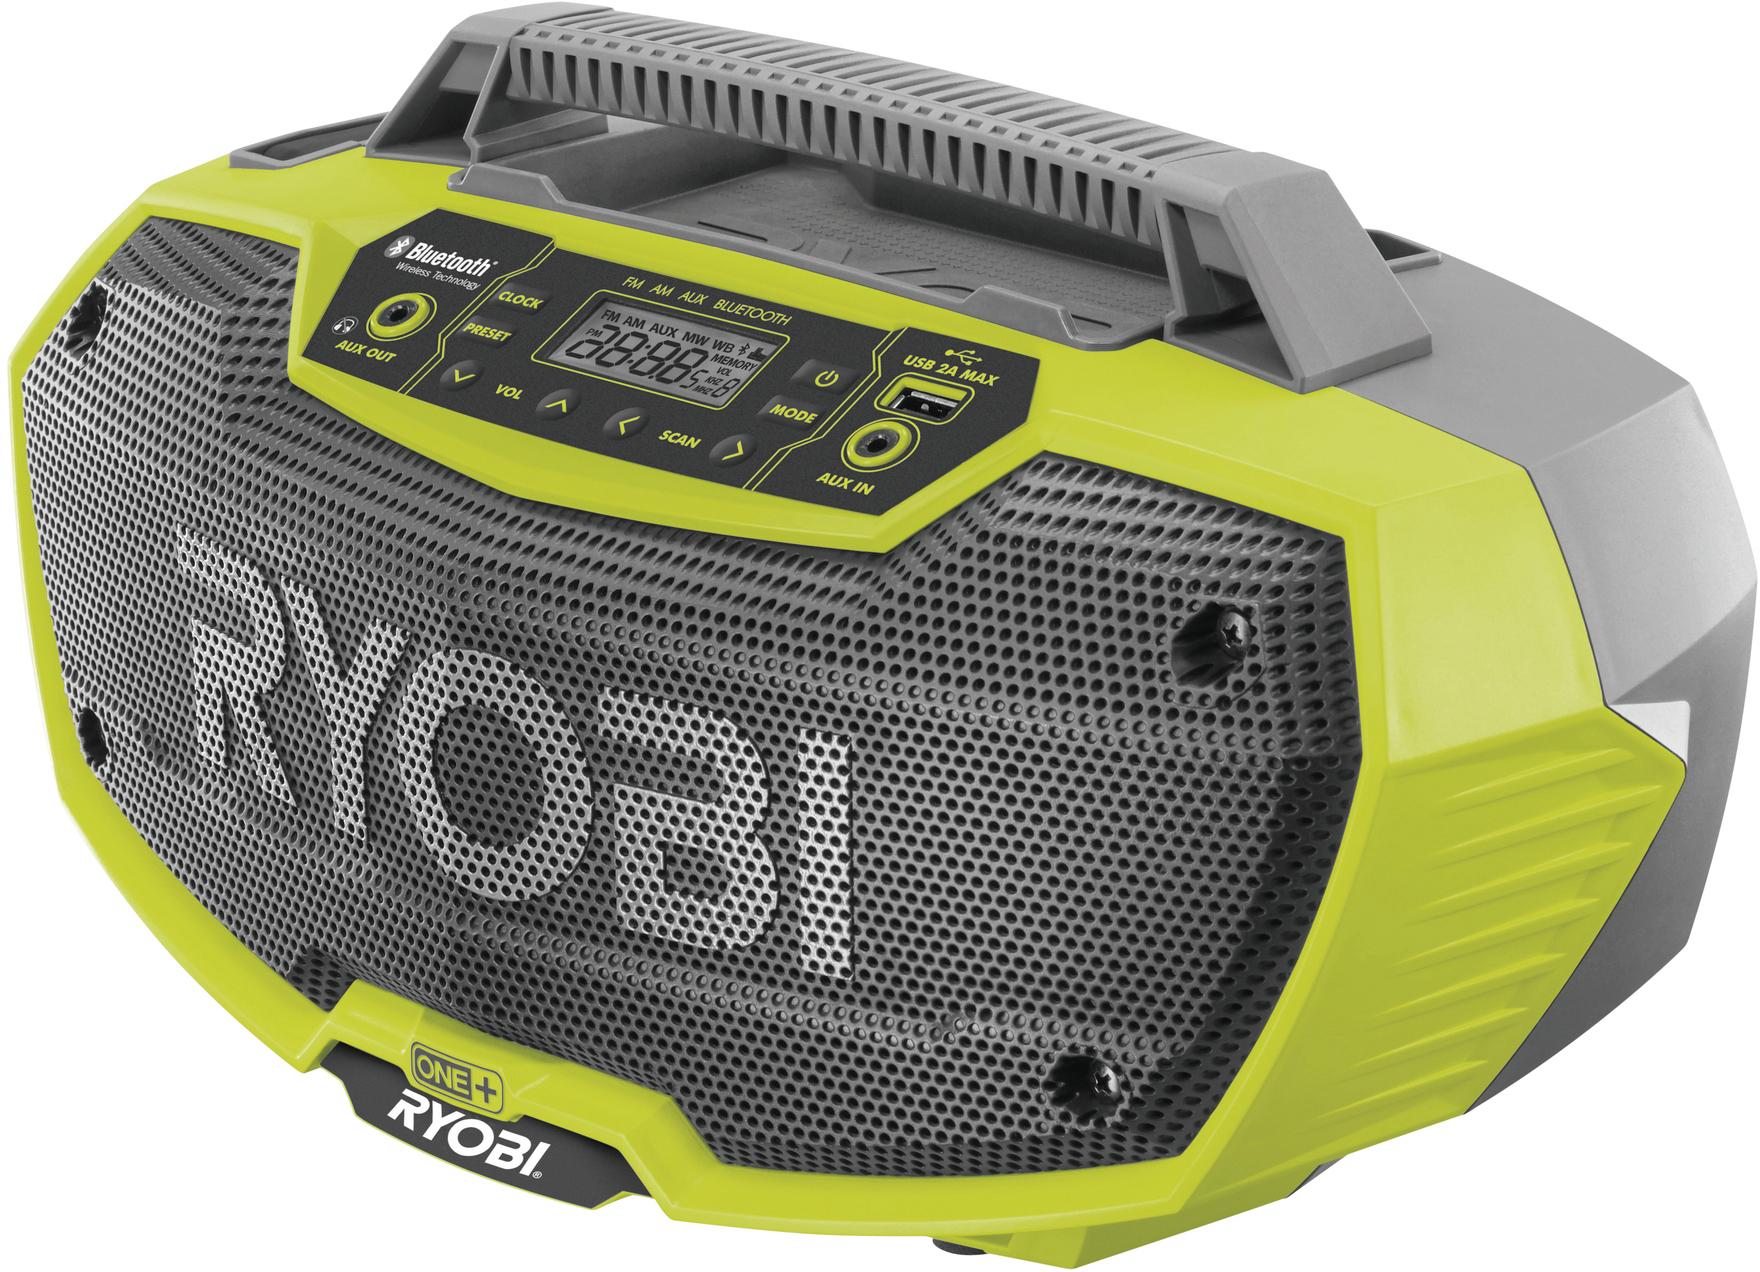 Ryobi 18V One+ Stereo (Bare Tool)